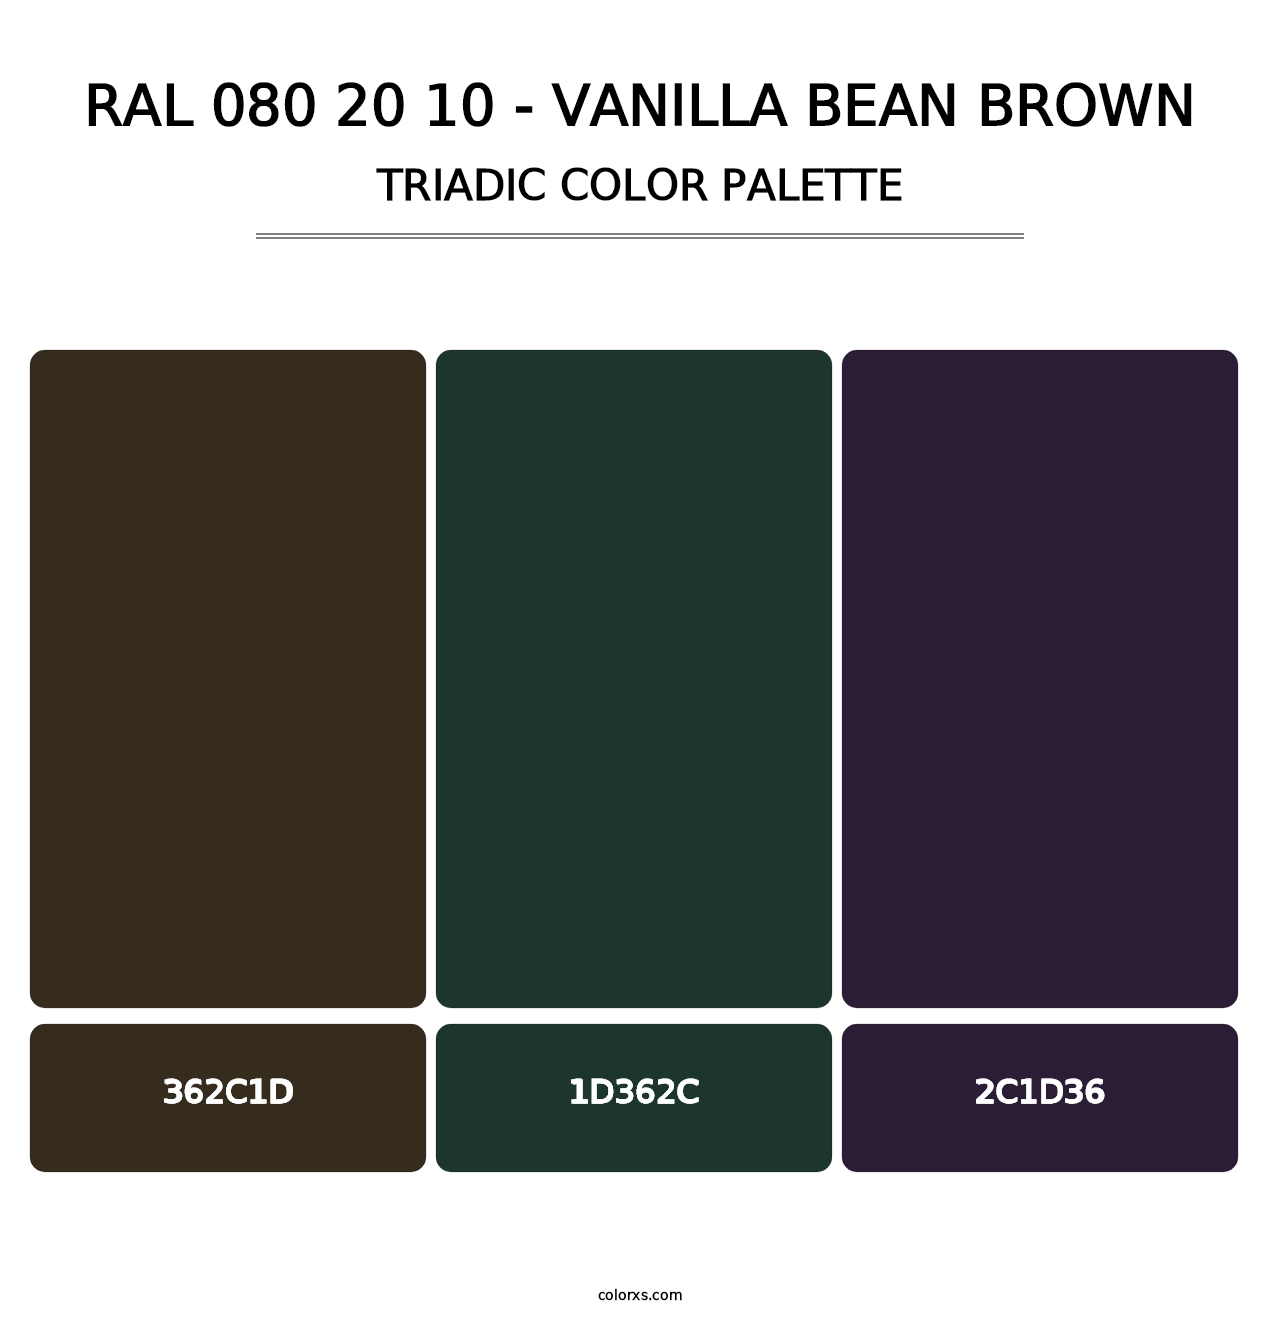 RAL 080 20 10 - Vanilla Bean Brown - Triadic Color Palette